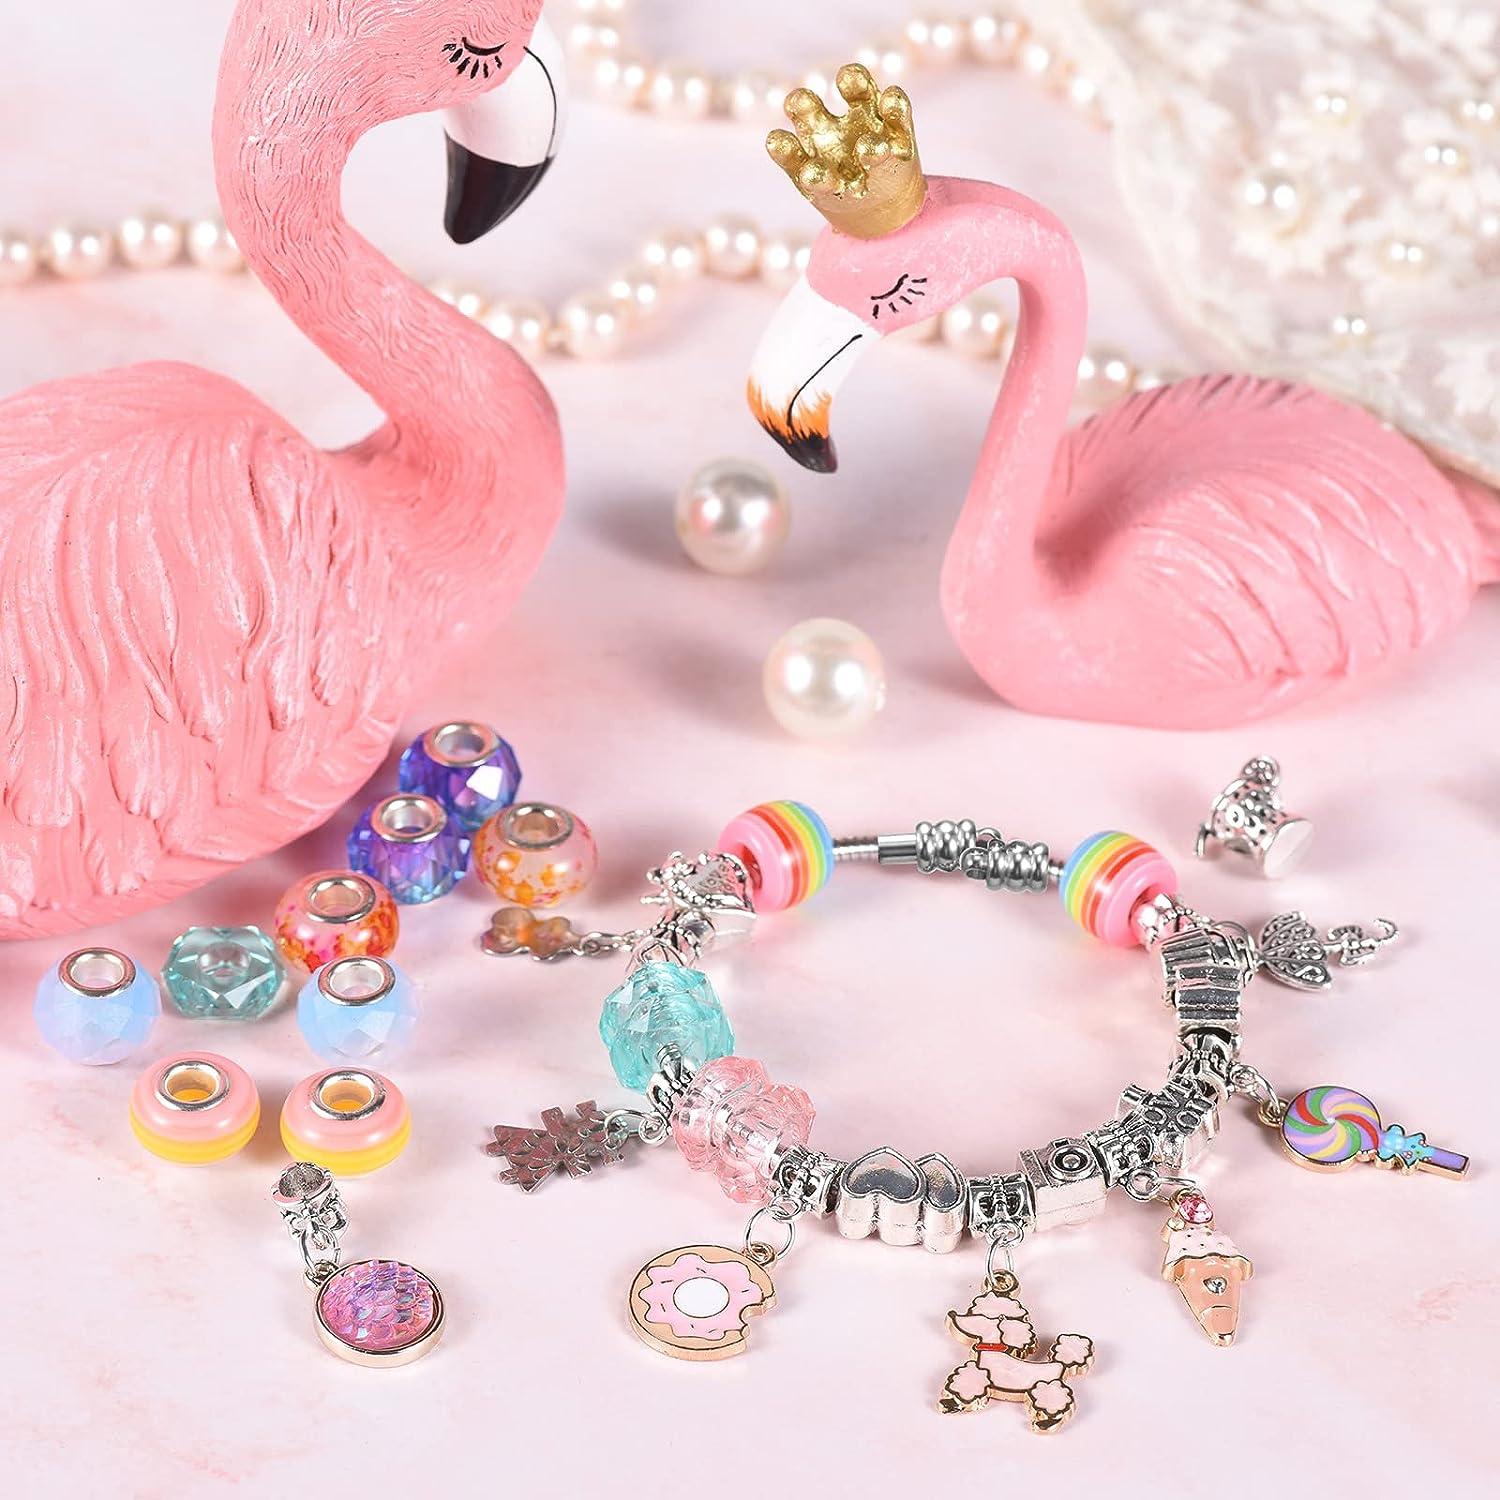 BDBKYWY Charm Bracelet Making Kit & Unicorn/Mermaid Girl Toy